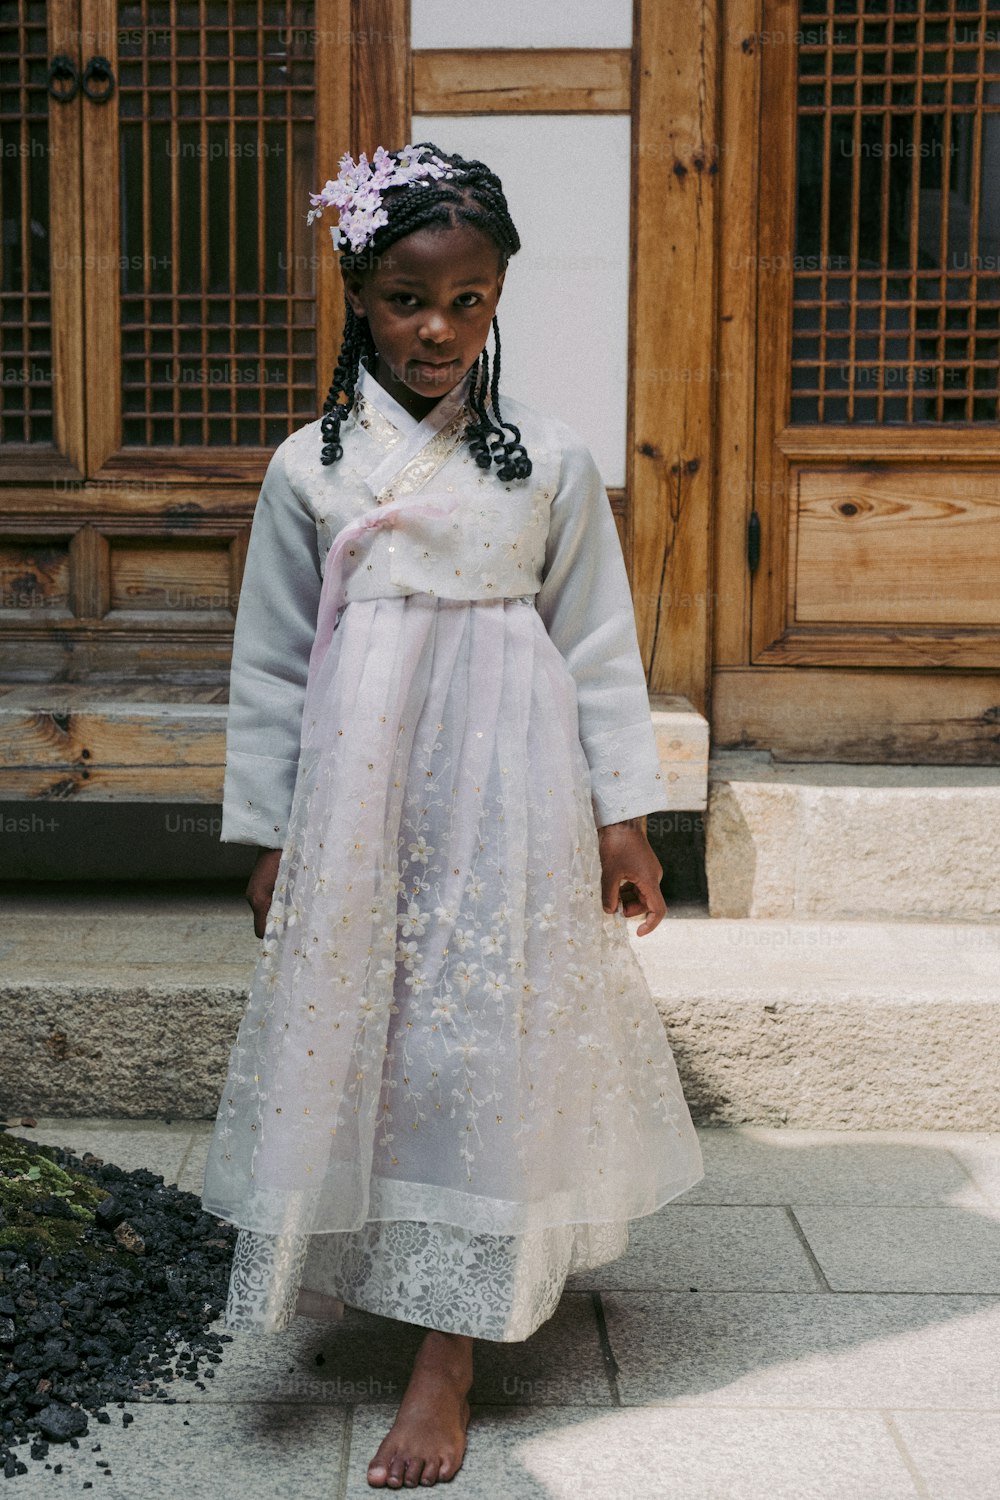 a little girl in a dress standing on a sidewalk